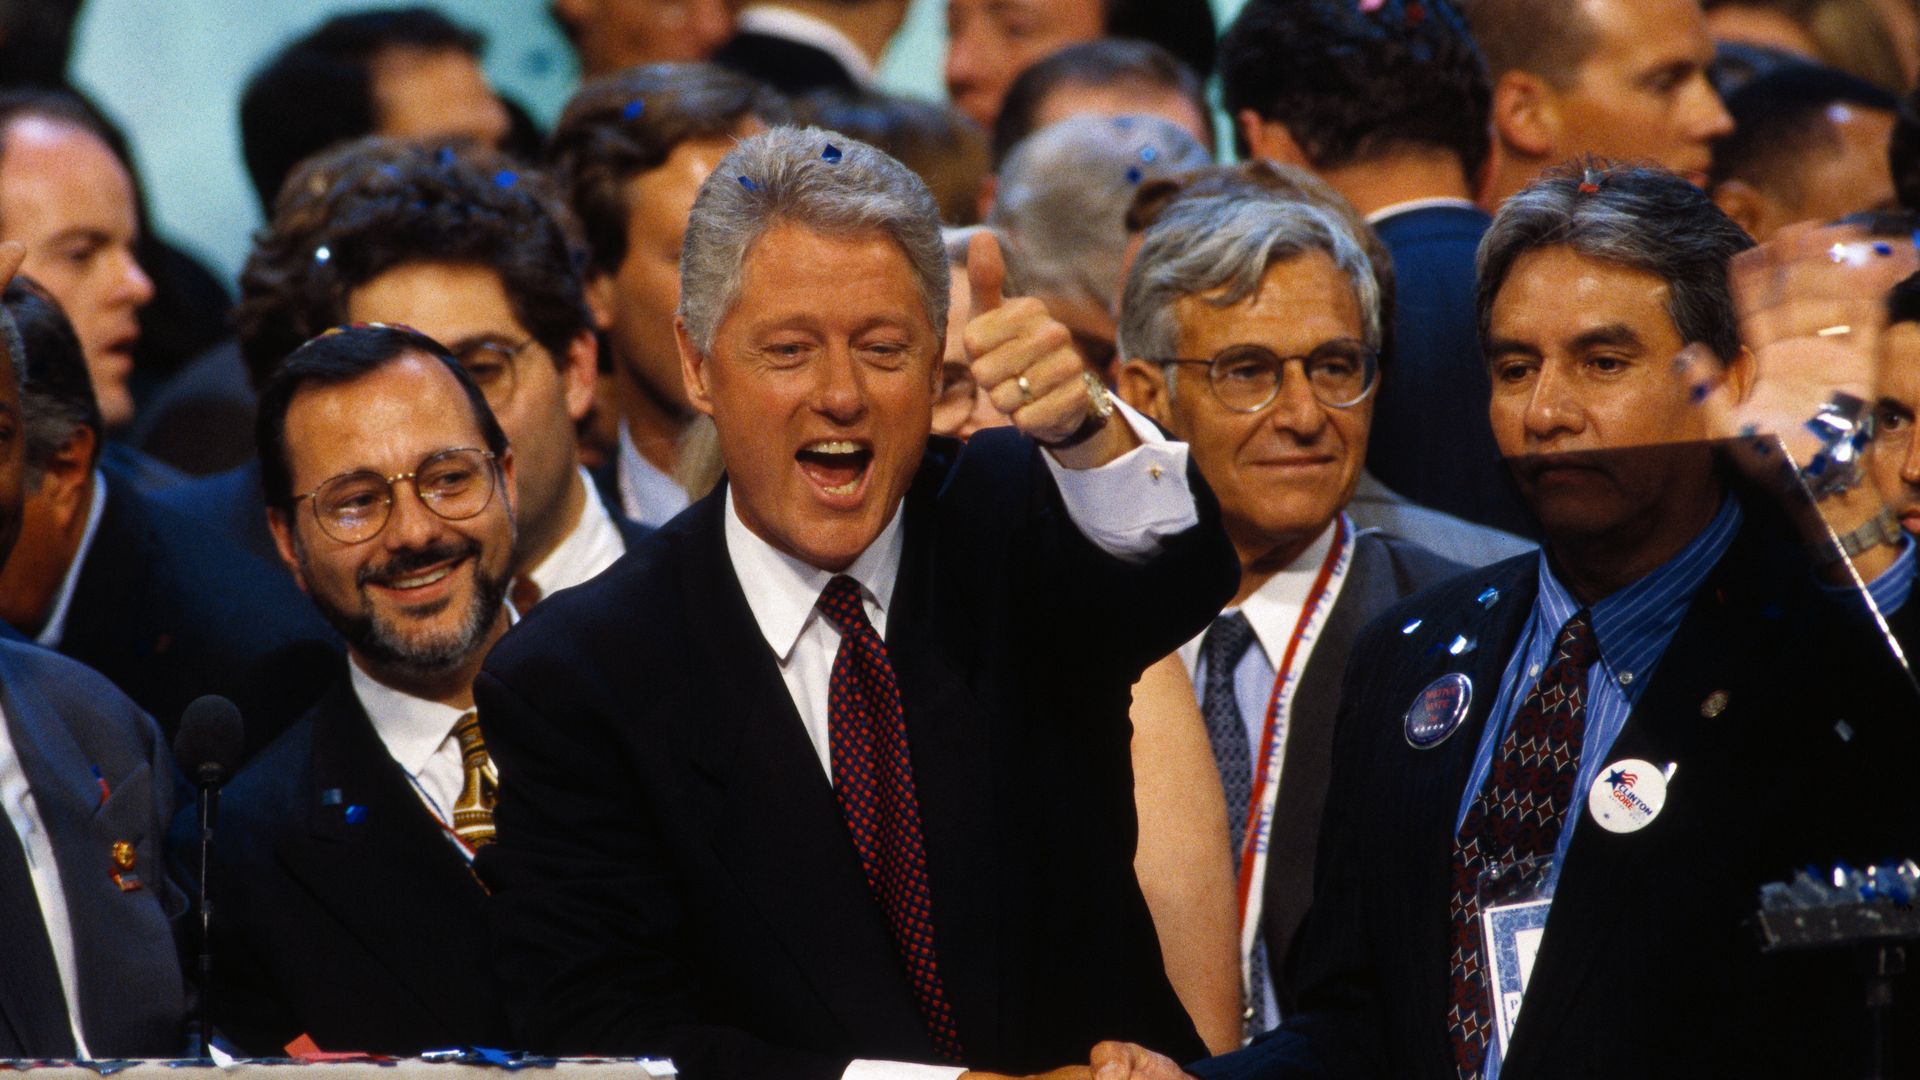 Bill Clinton at a convention